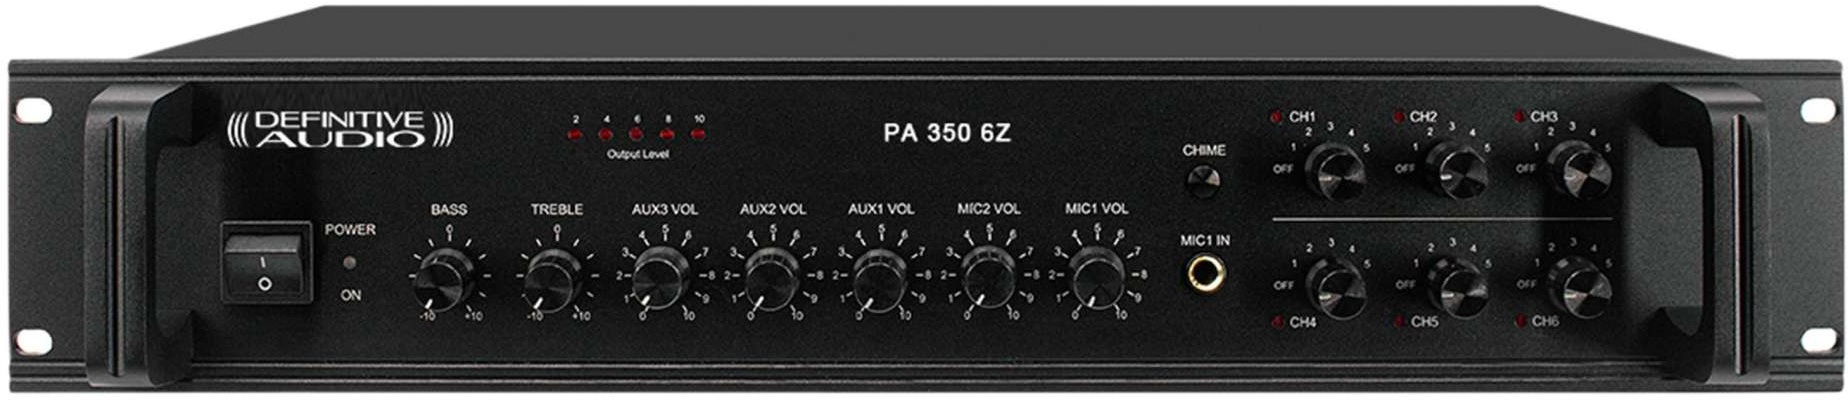 Definitive Audio Pa 350 6z - Multikanäle Endstufe - Main picture